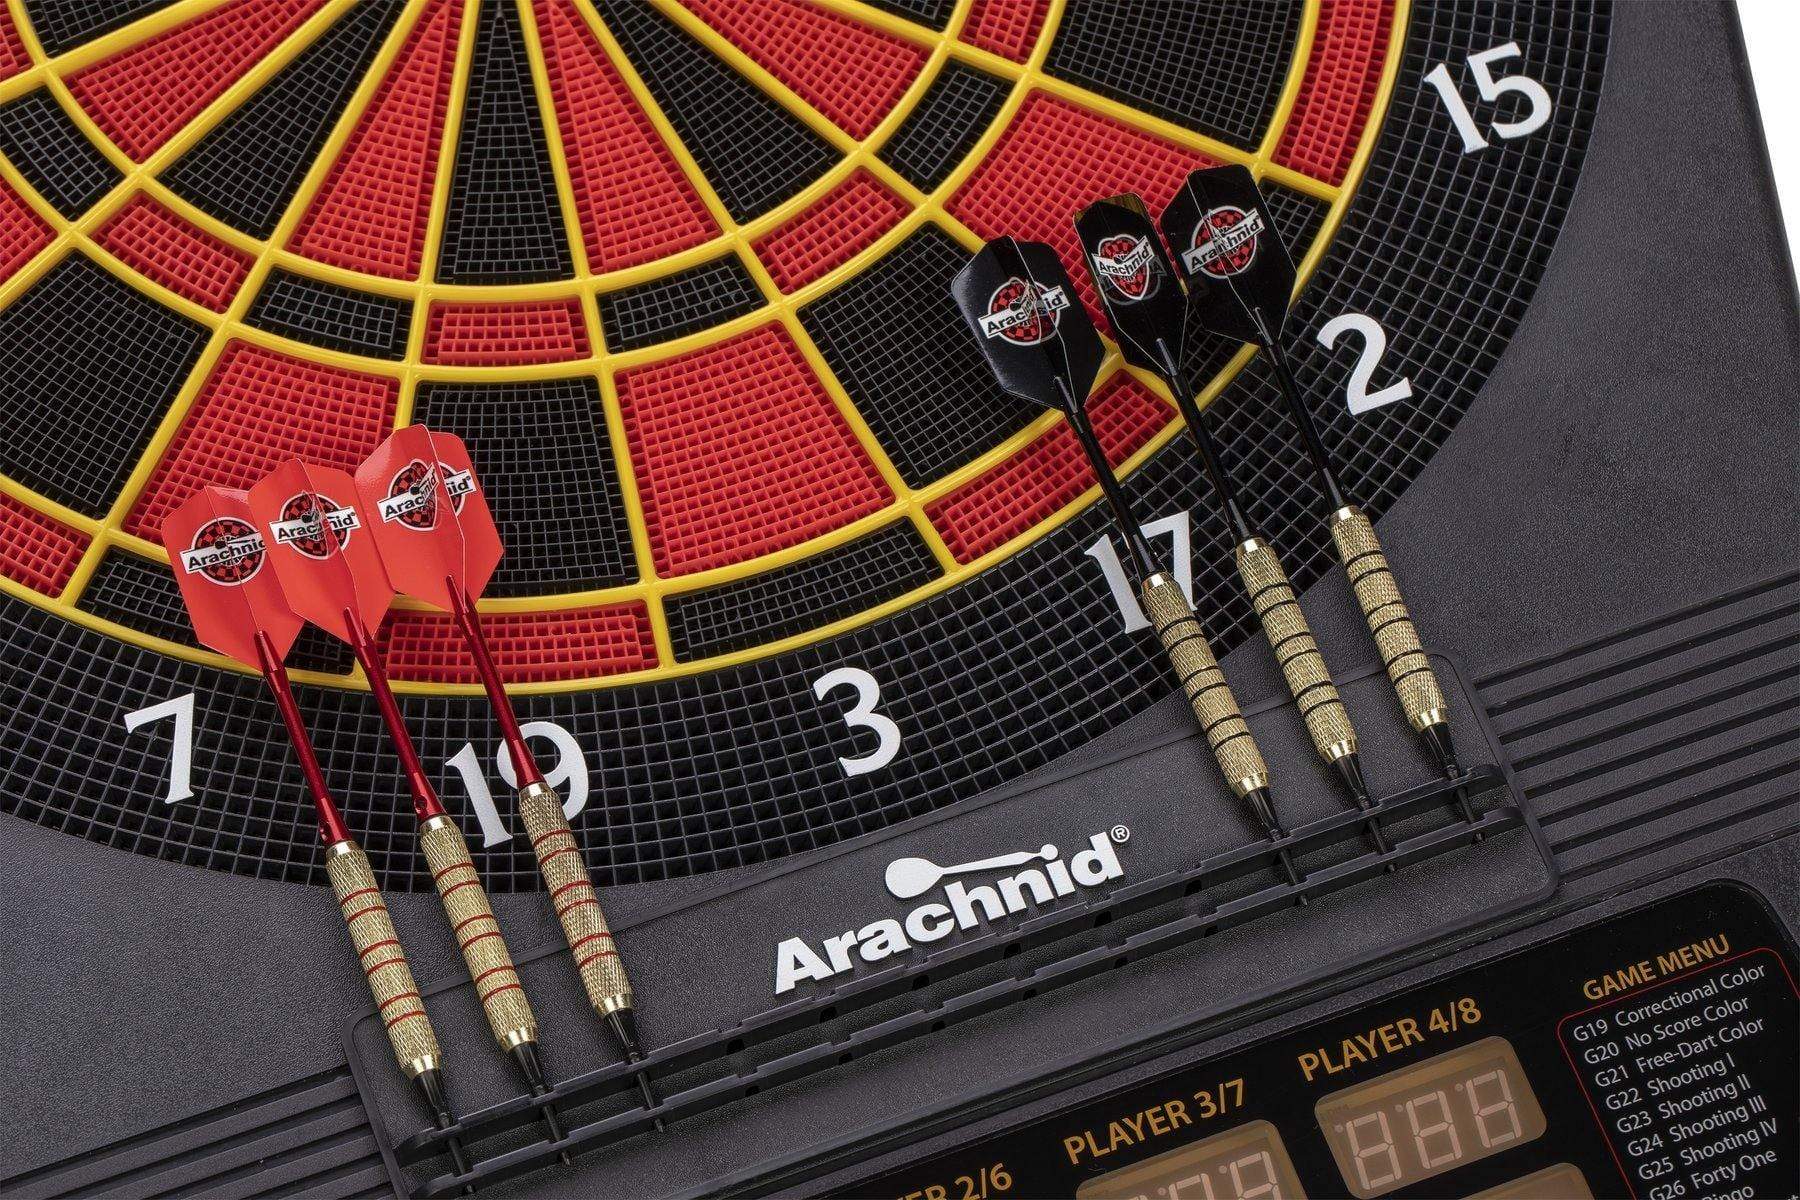 Arachnid Darting ARACHNID - Cricket Pro 650 Electronic Dartboard - E650ARA-2